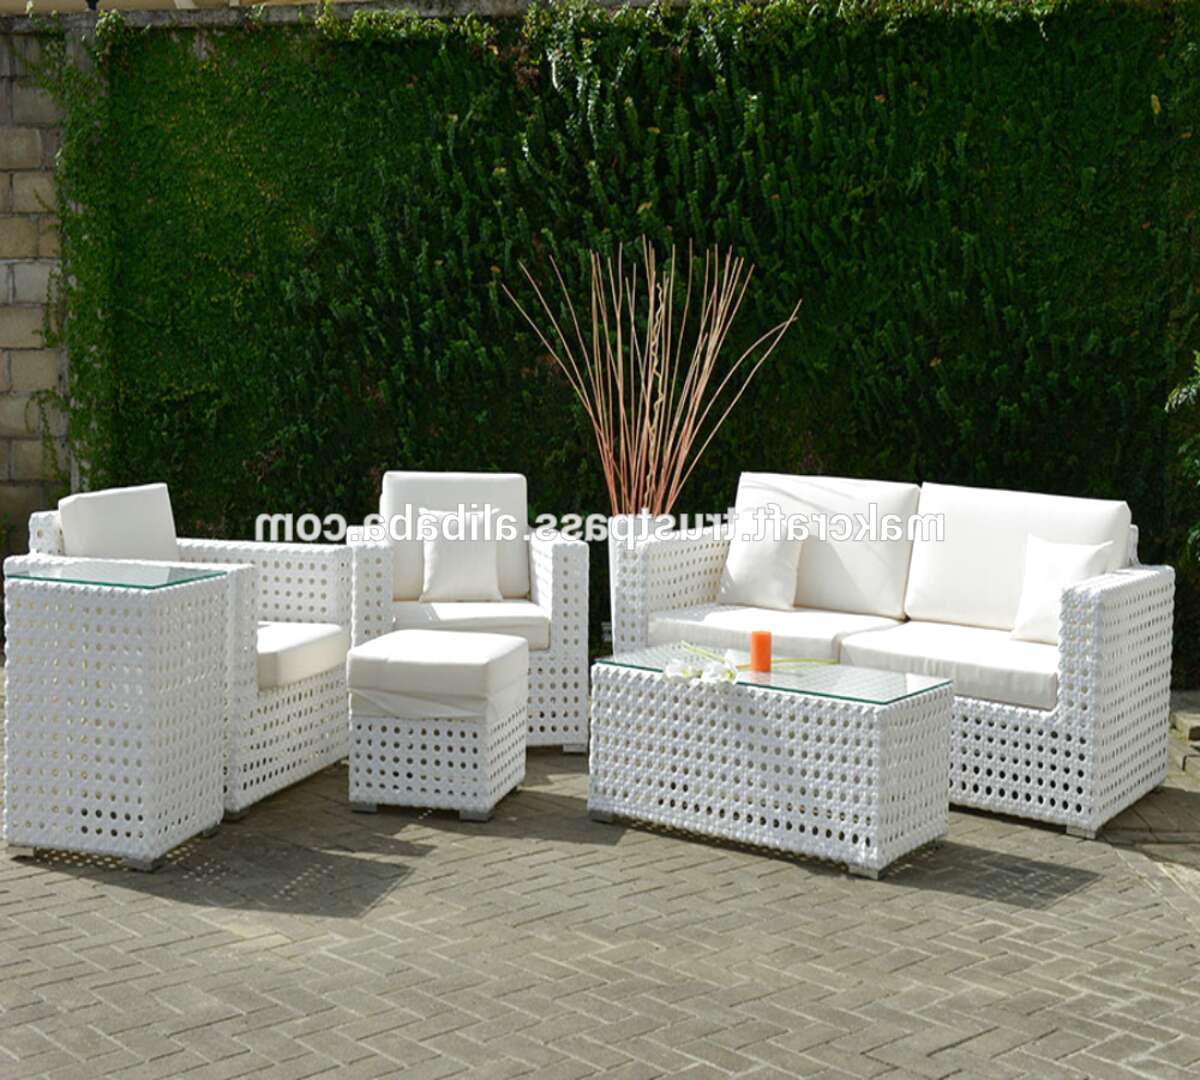 White Rattan Garden Furniture For Sale In Uk